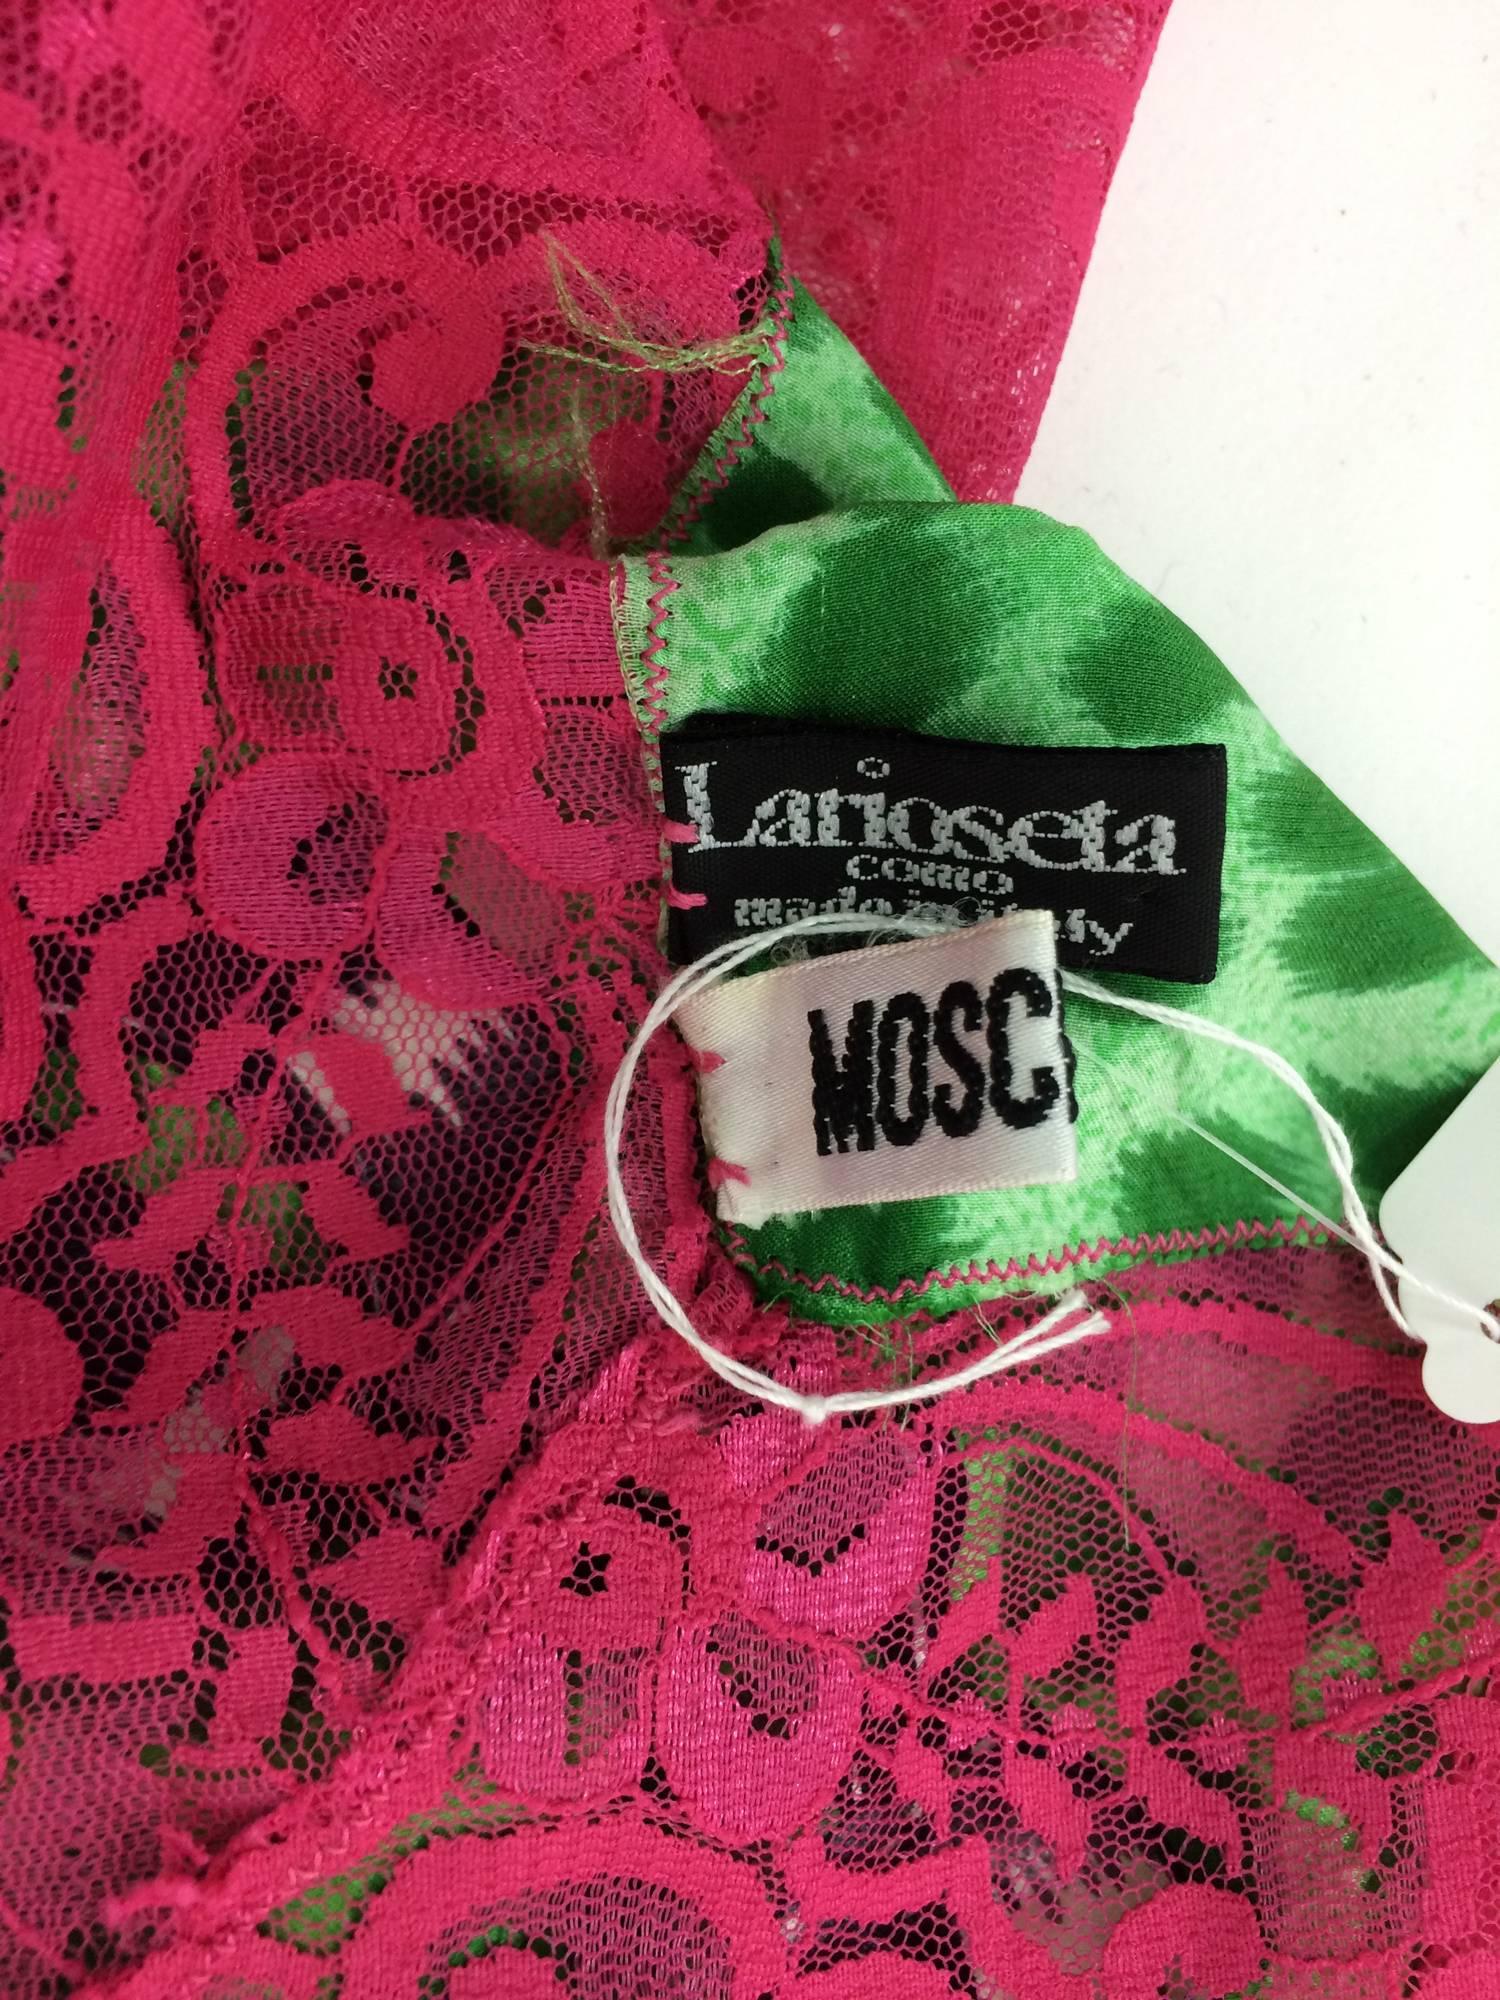 Moschino Sado Masochino large silk scarf with hot pink lace border 41